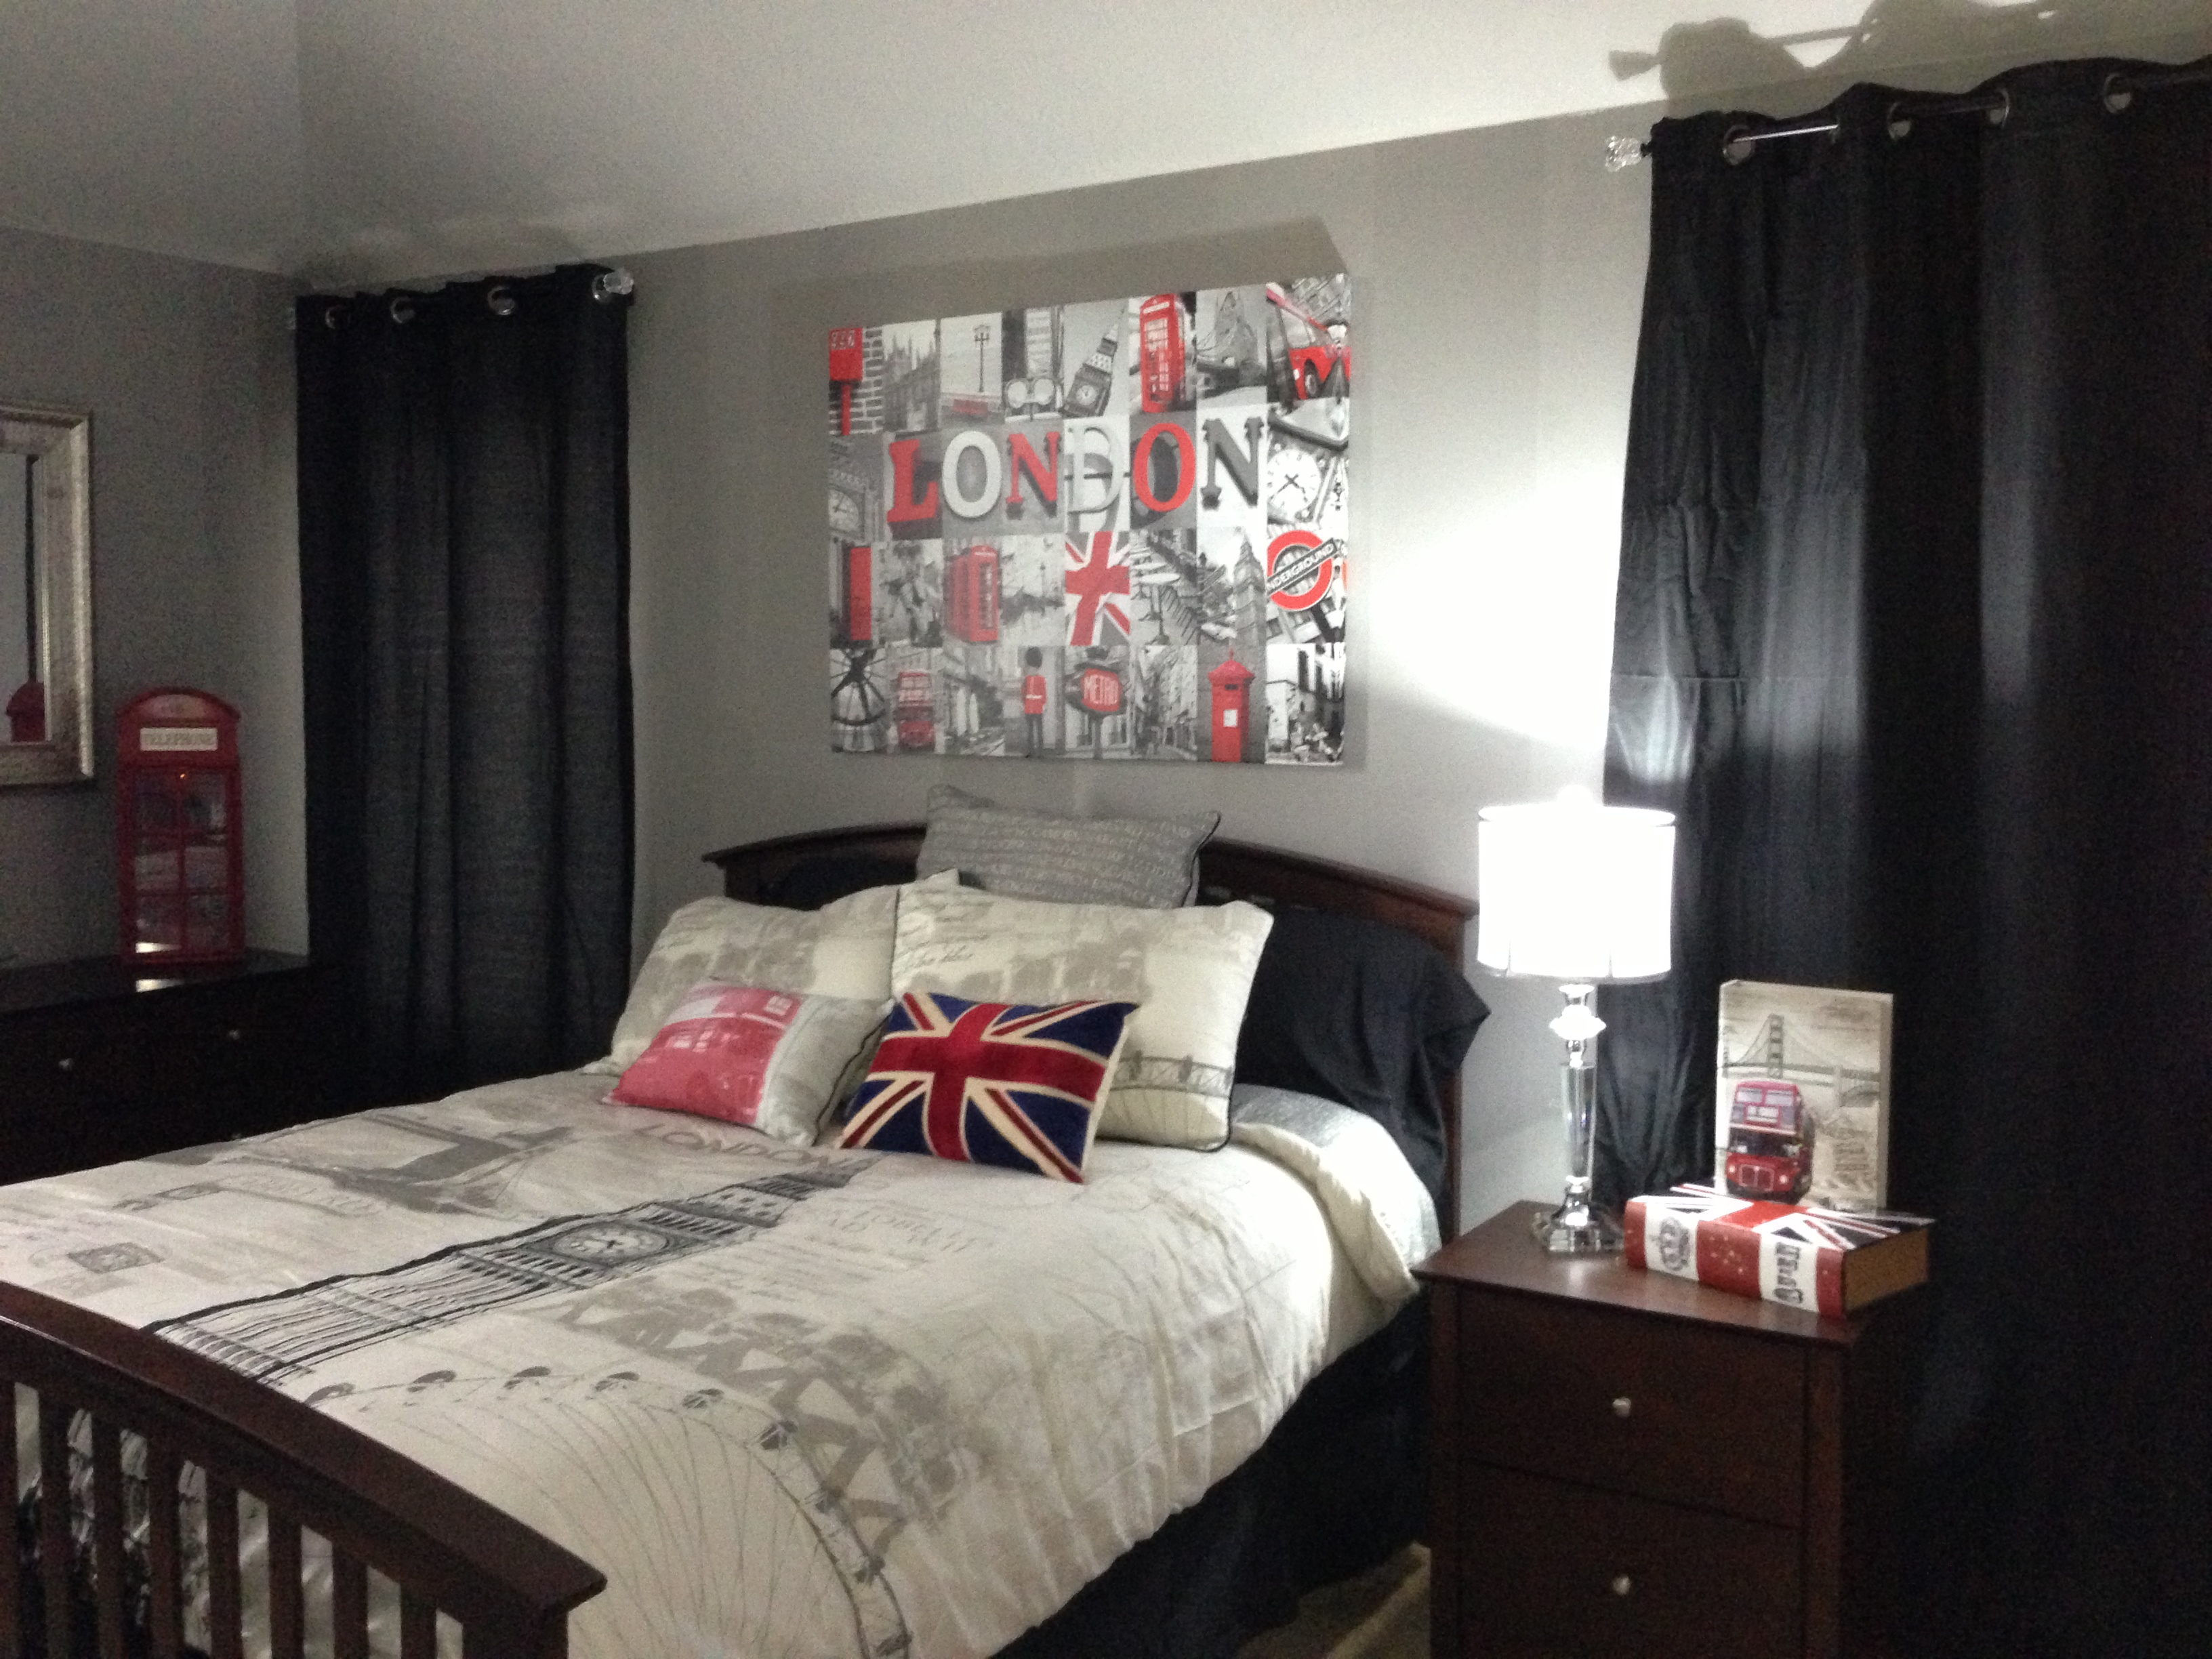 london wallpaper for bedrooms,bedroom,bed,room,furniture,property